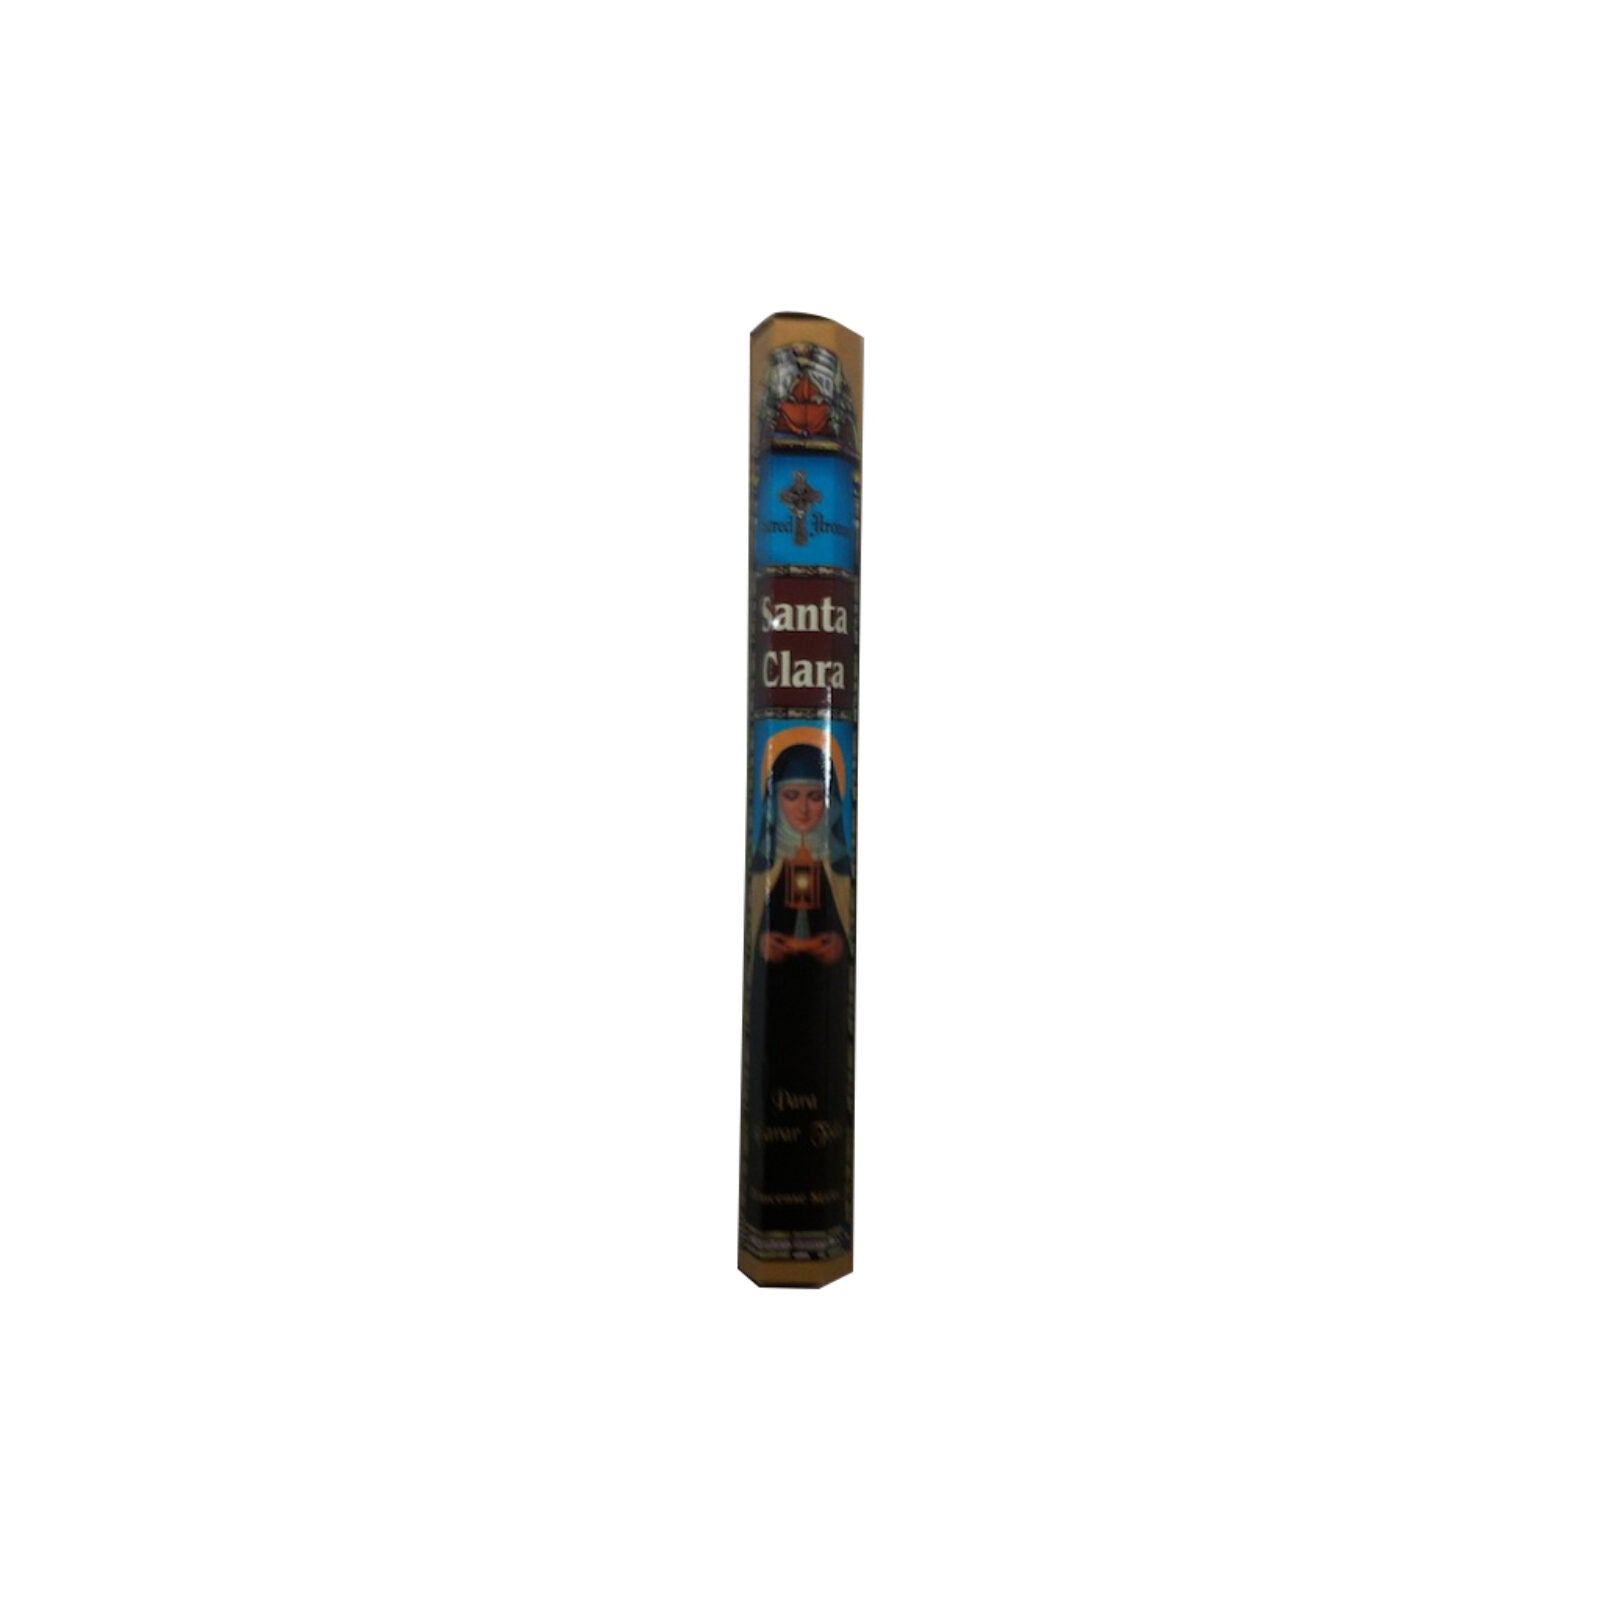 Saint Clare (Santa Clara) Incense Sticks